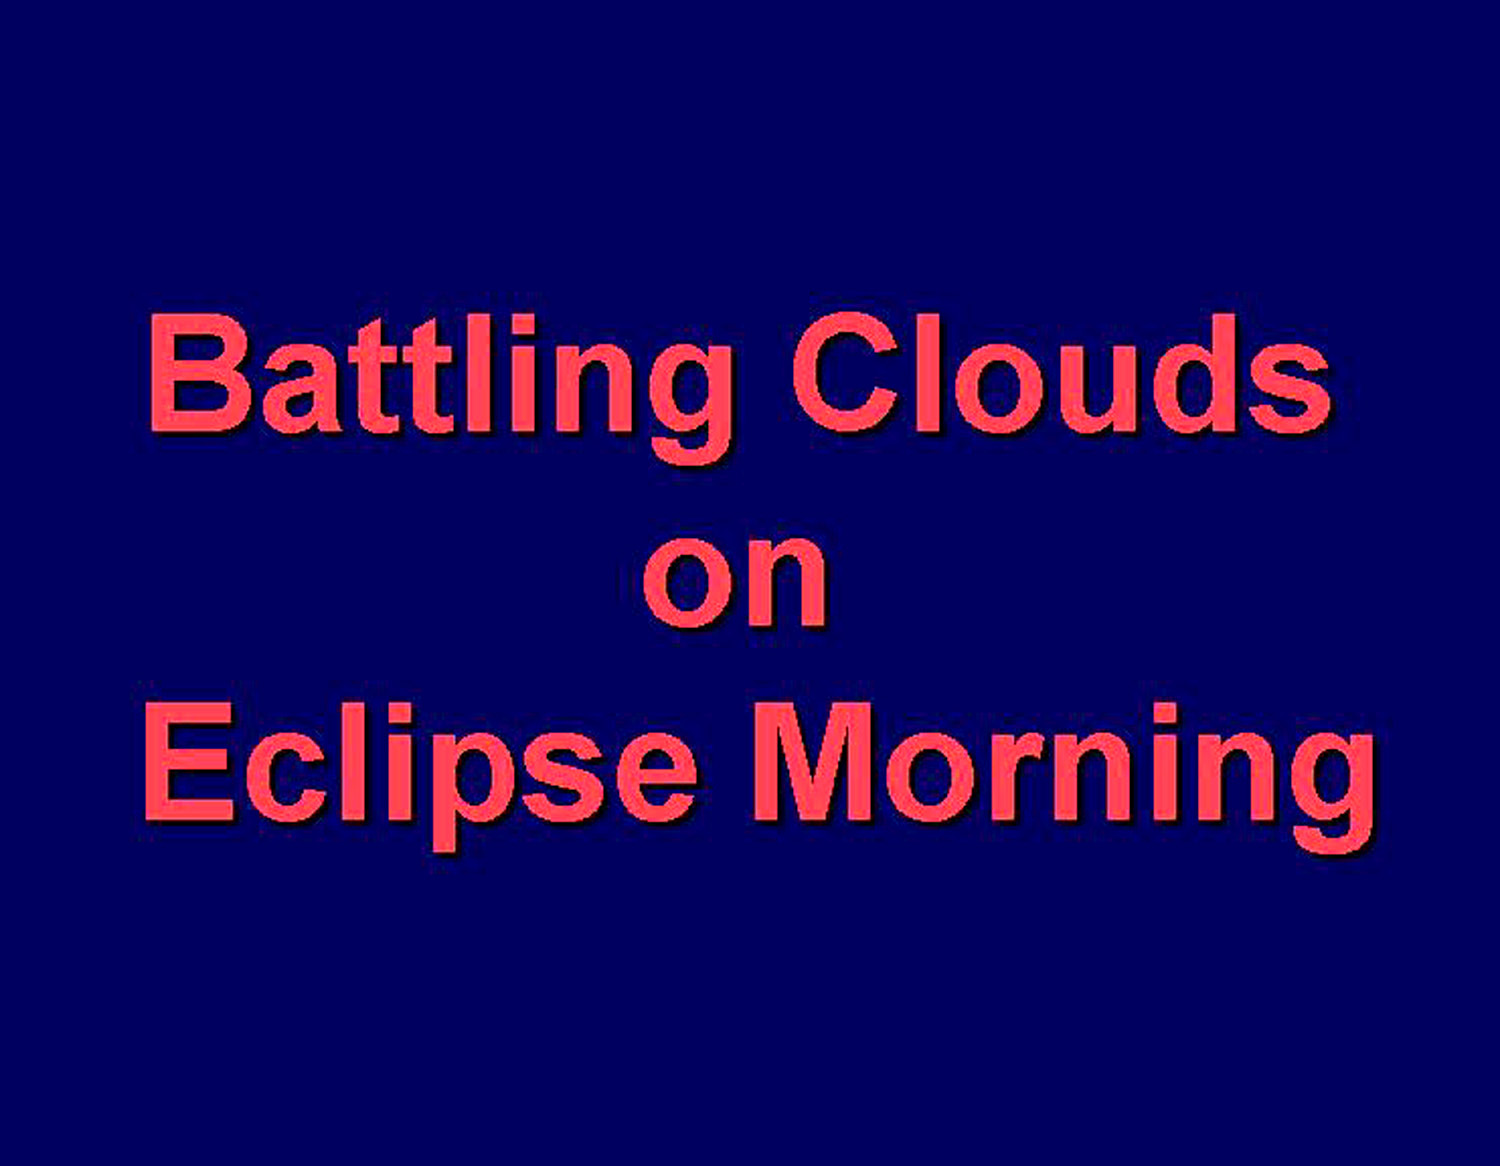 Eclipse 2012 - A74 - Title - Battling Clouds